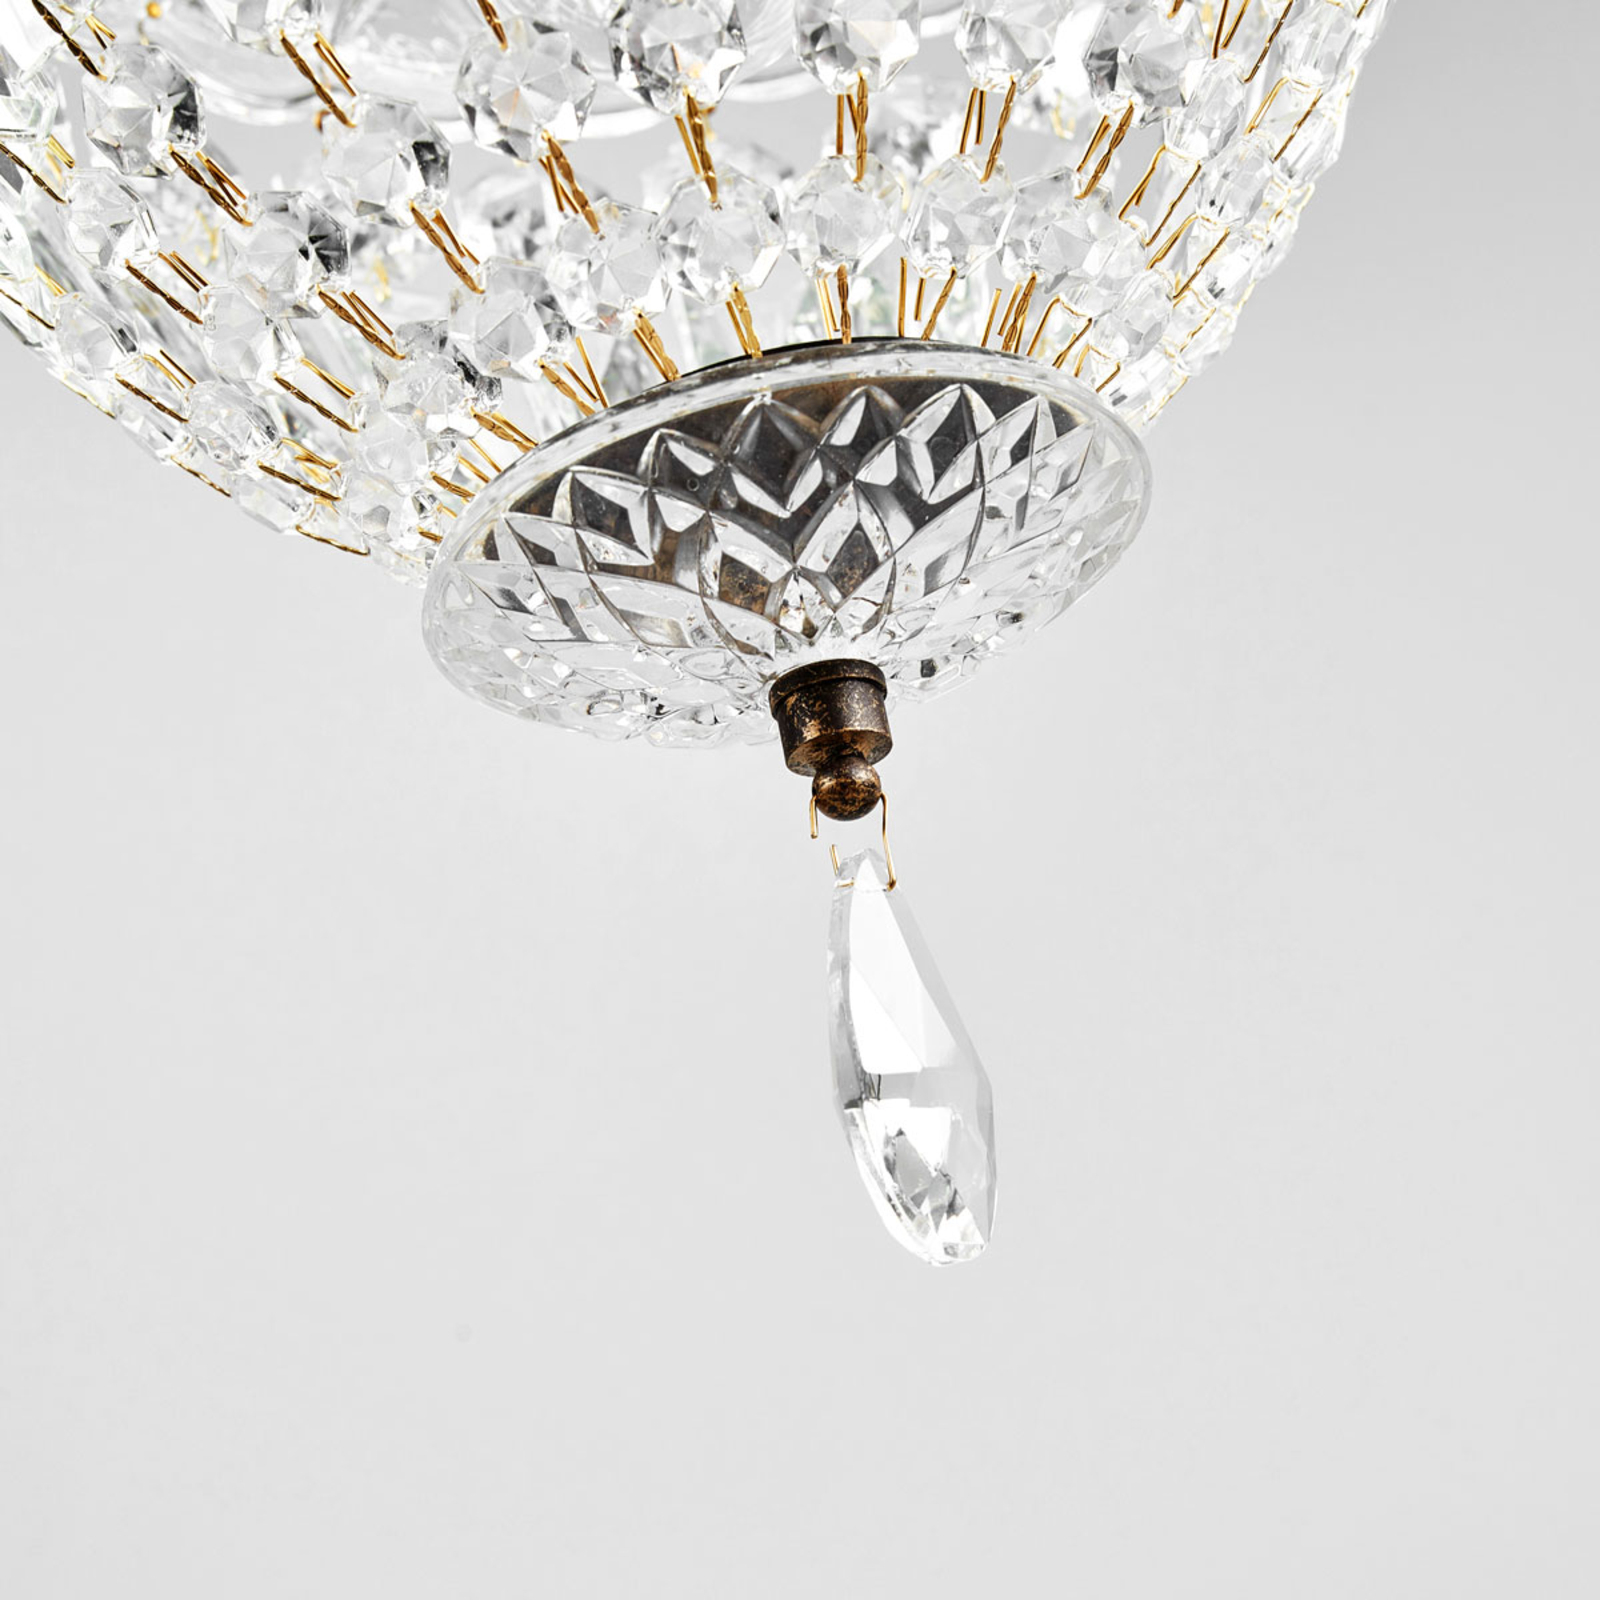 Hanglamp Arila, kristalglas, Ø 25 cm